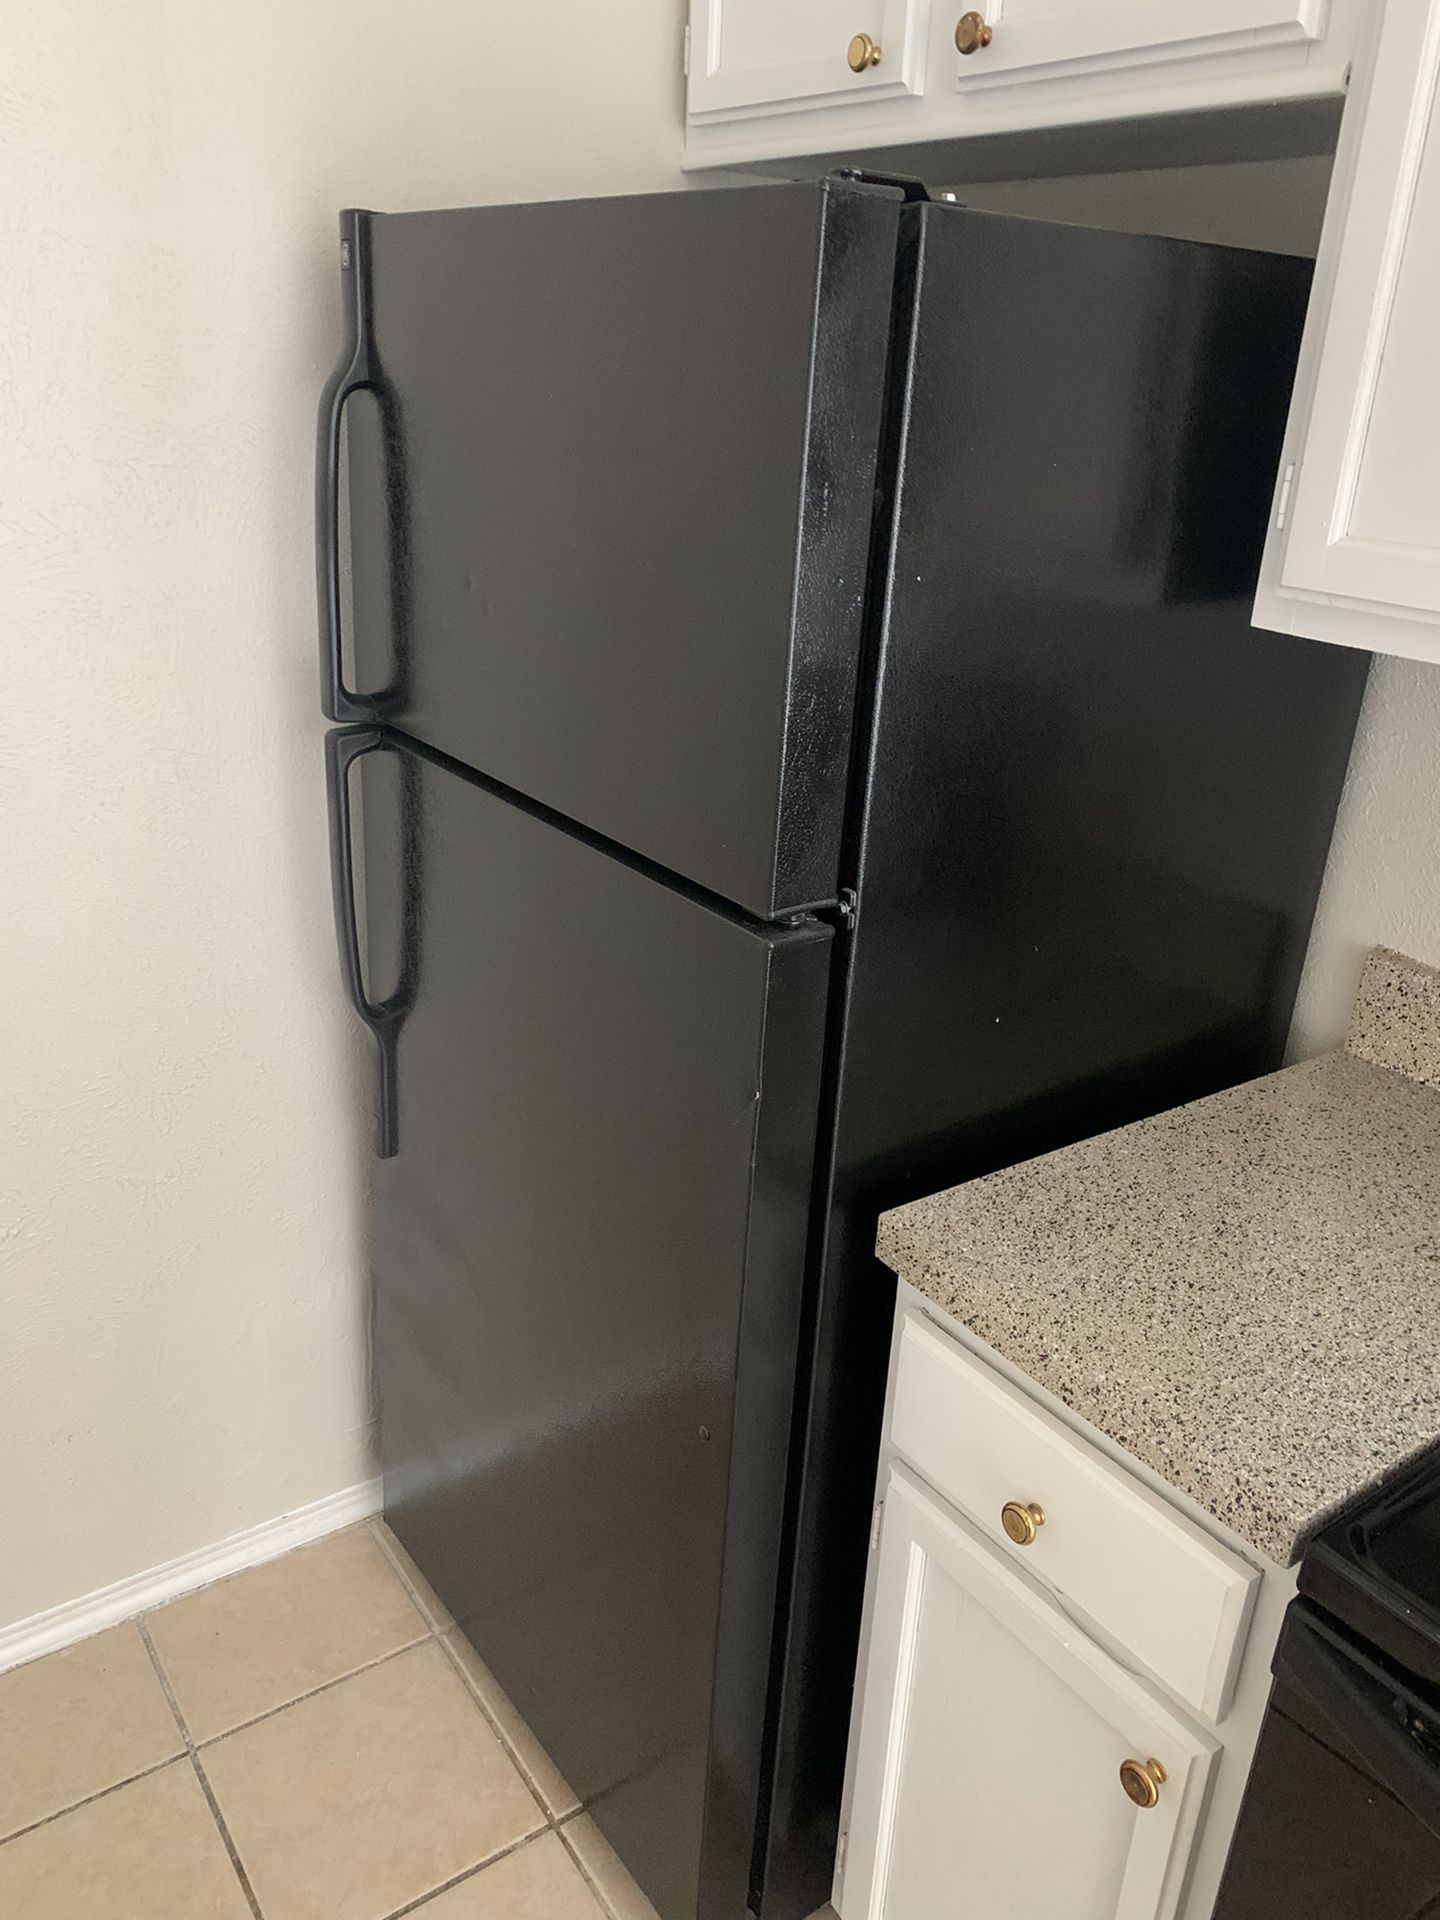 Black GE Refrigerator. Top Freezer. Works. Very clean. Very cold.